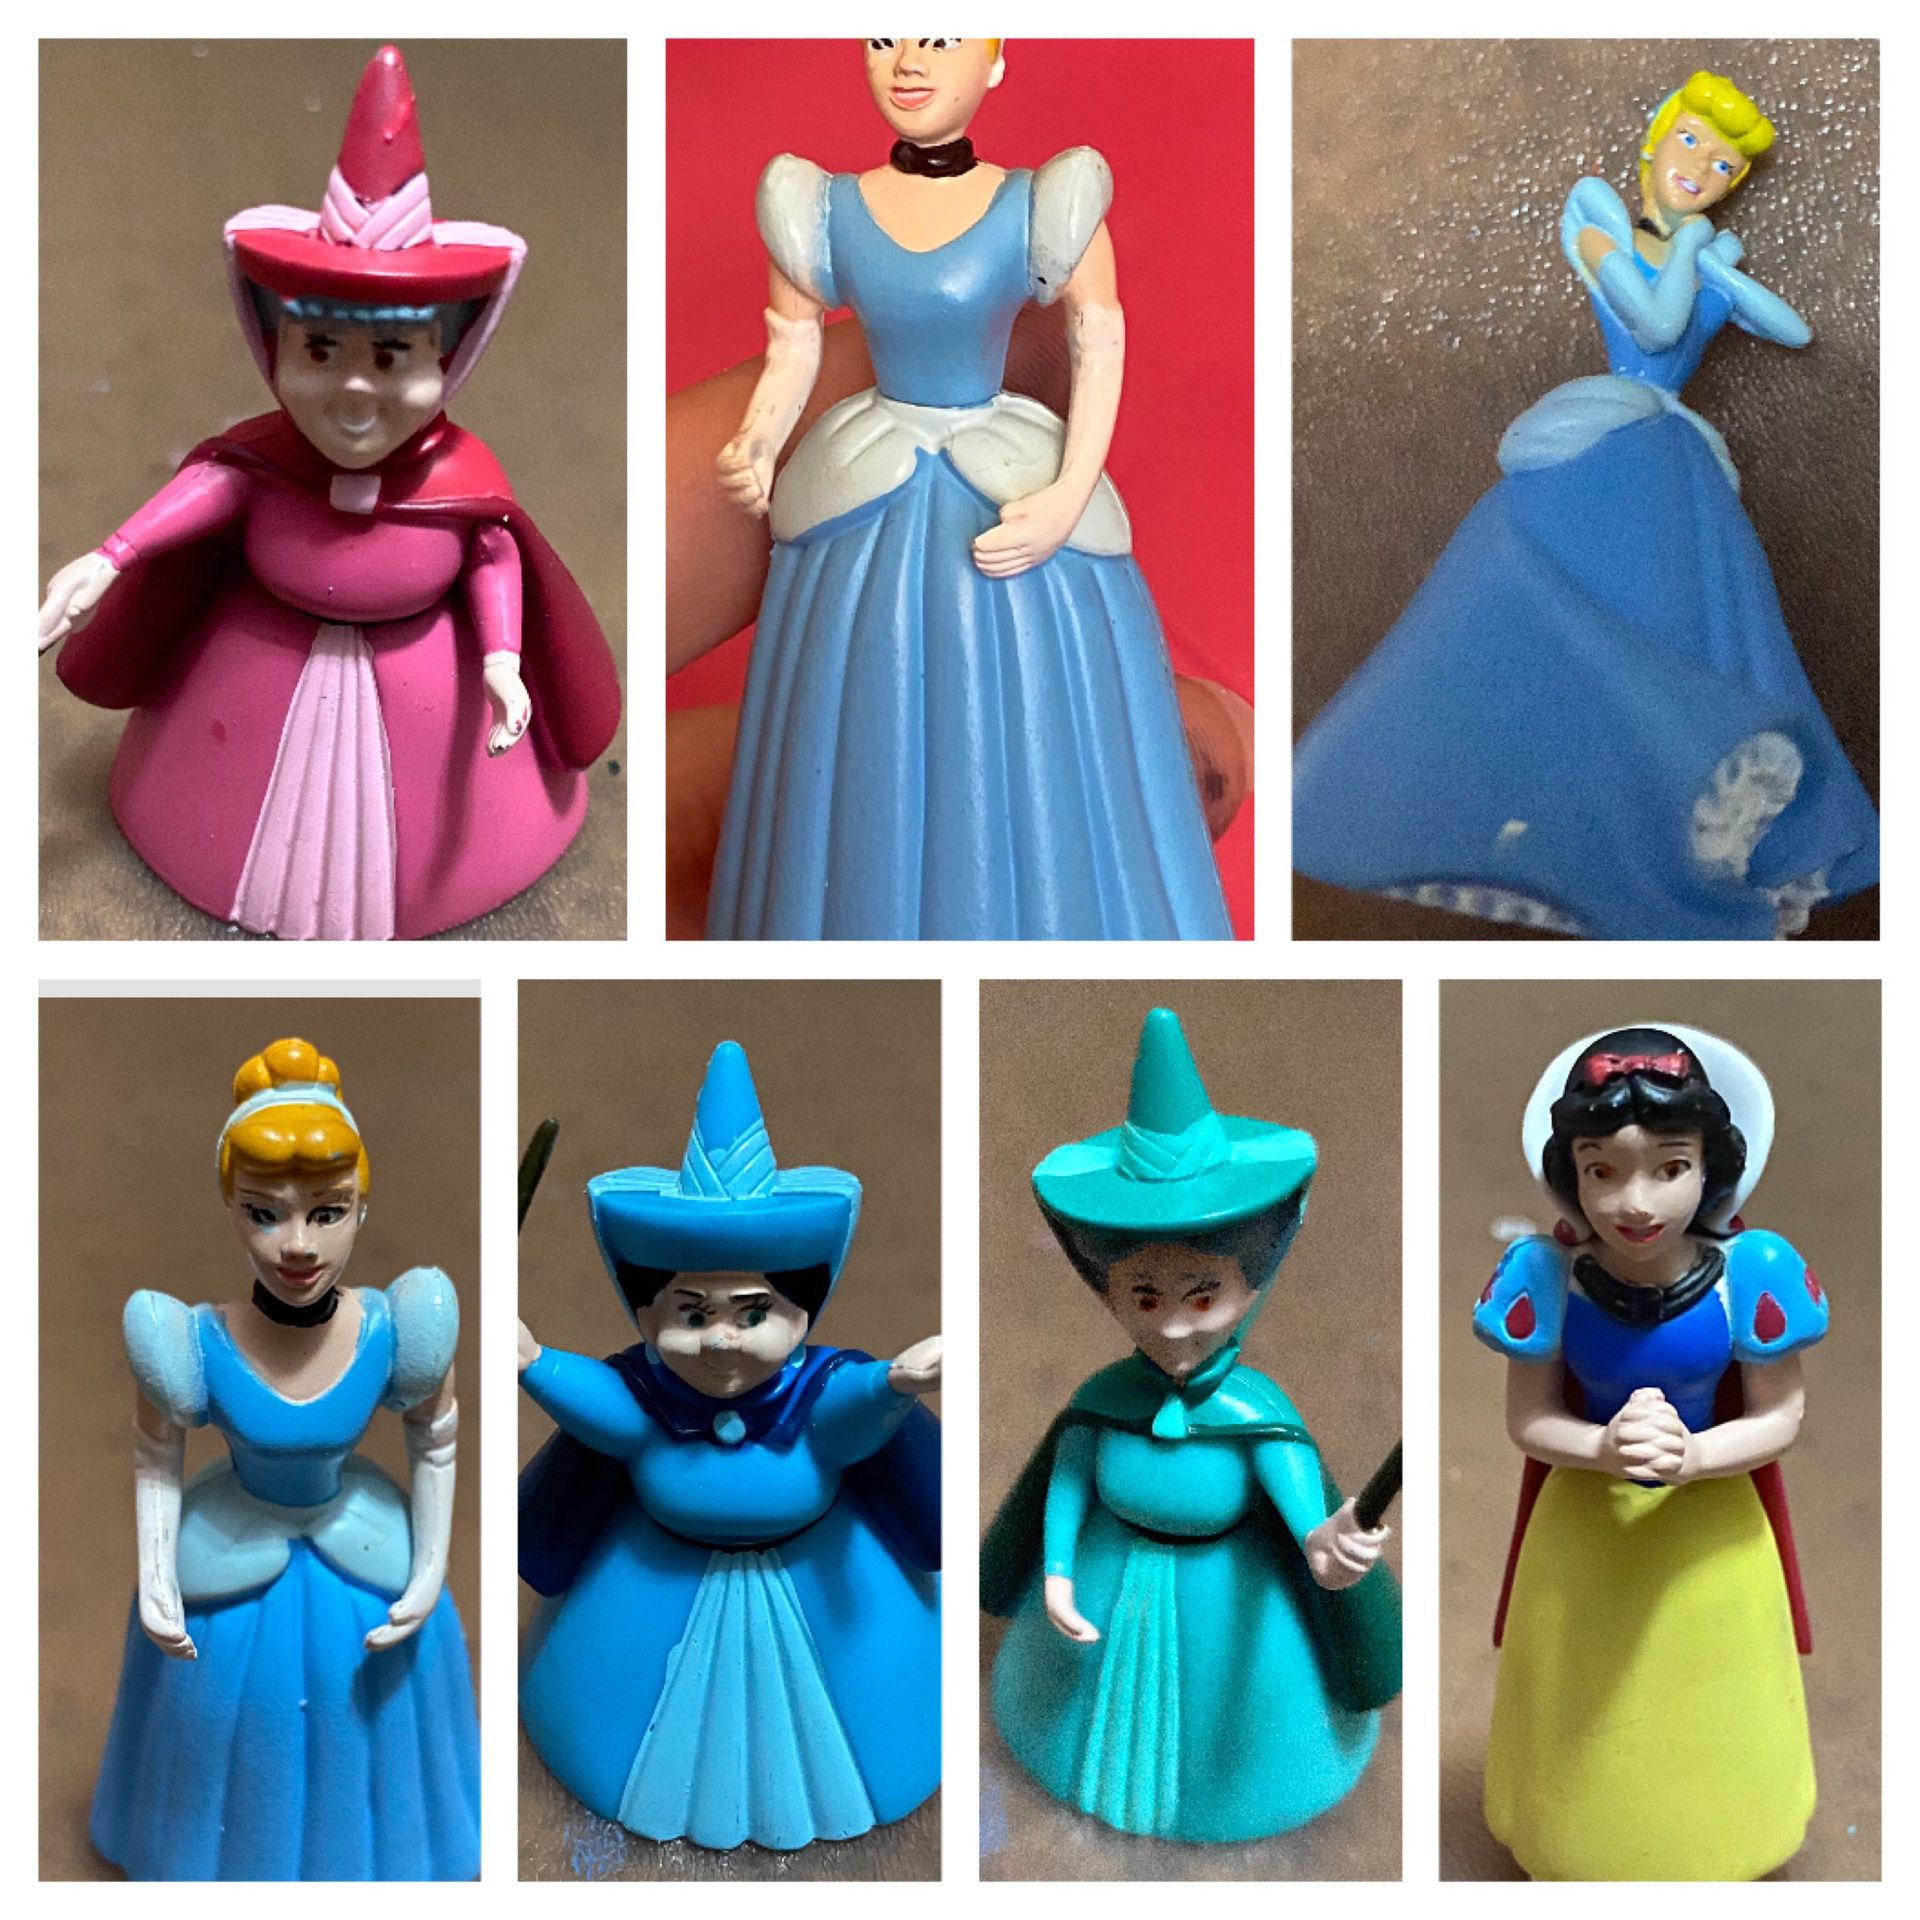 Disney Princess Mini Figurines and Dollhouse Accessories